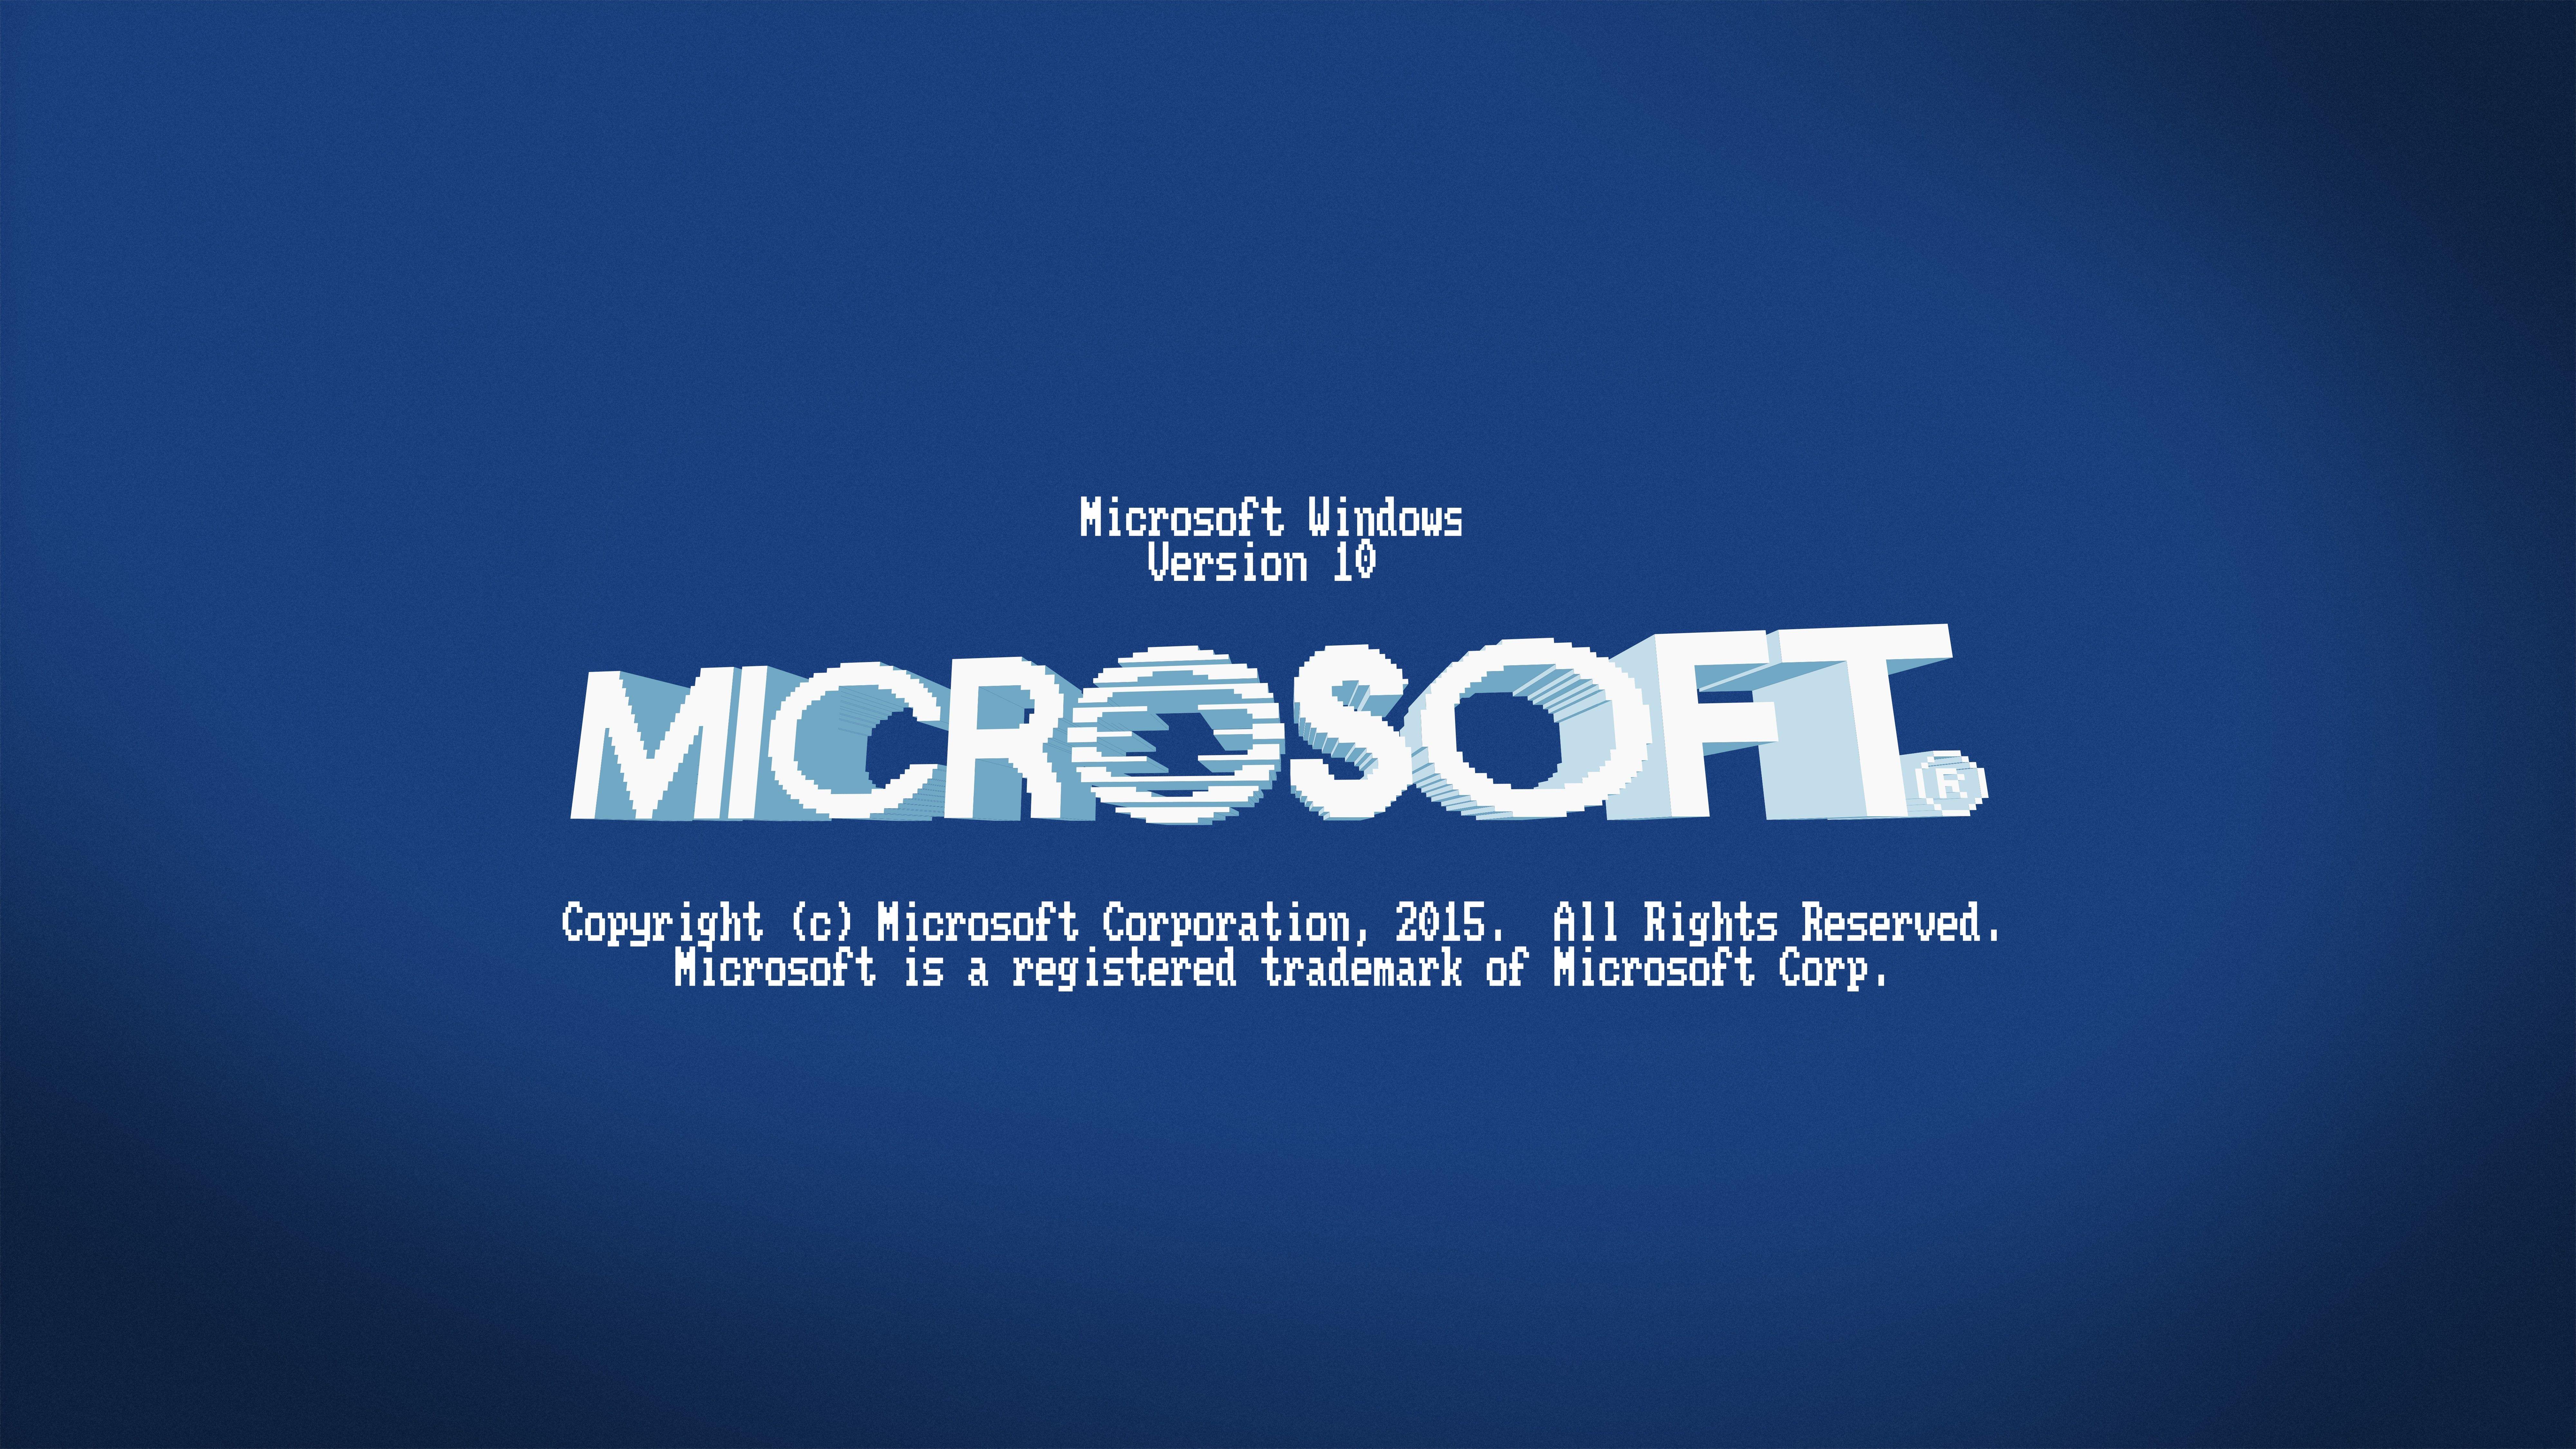 Wallpapers : text, logo, Microsoft Windows, brand, Windows 10